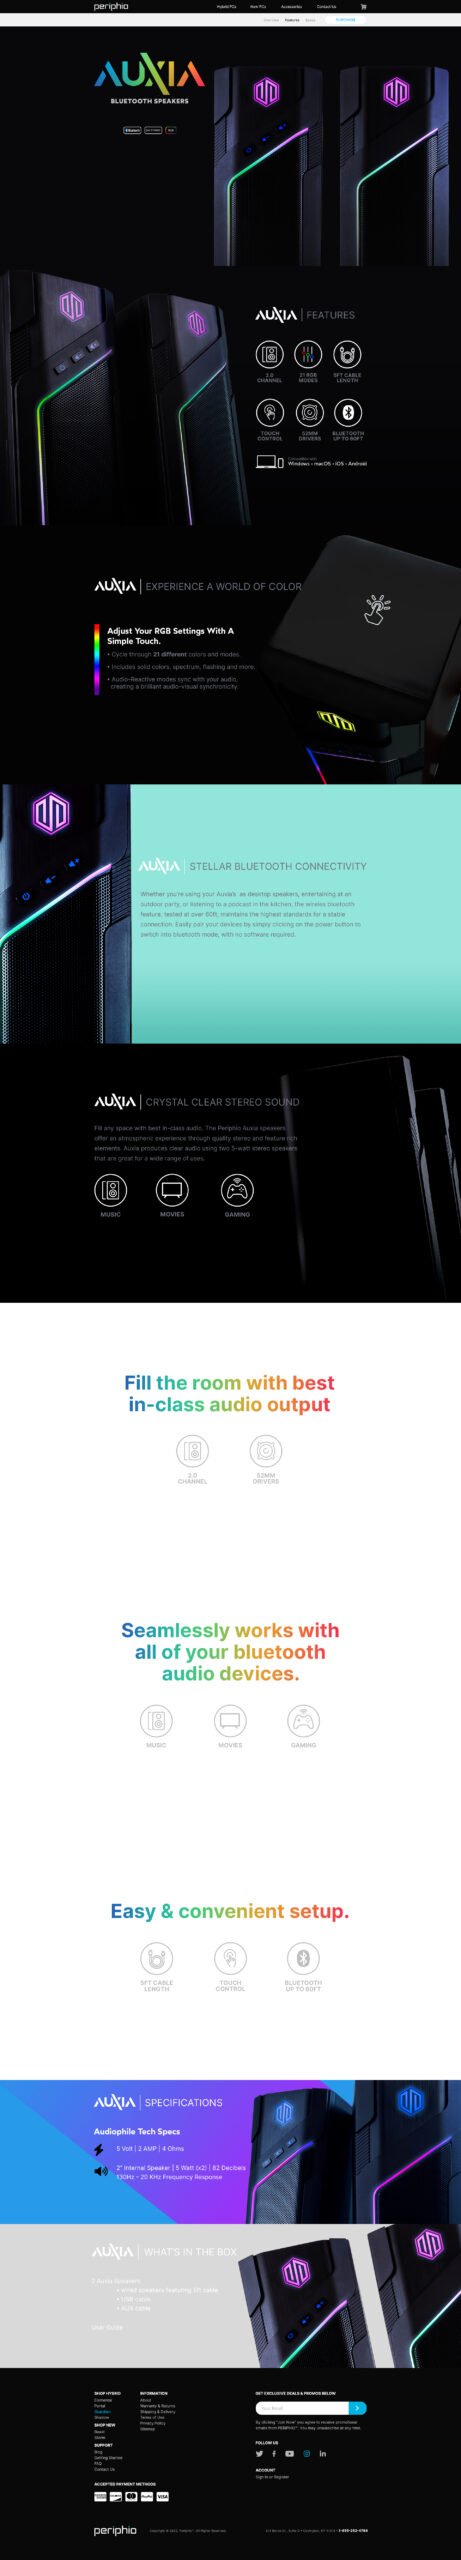 auxia-speakers-mock-up